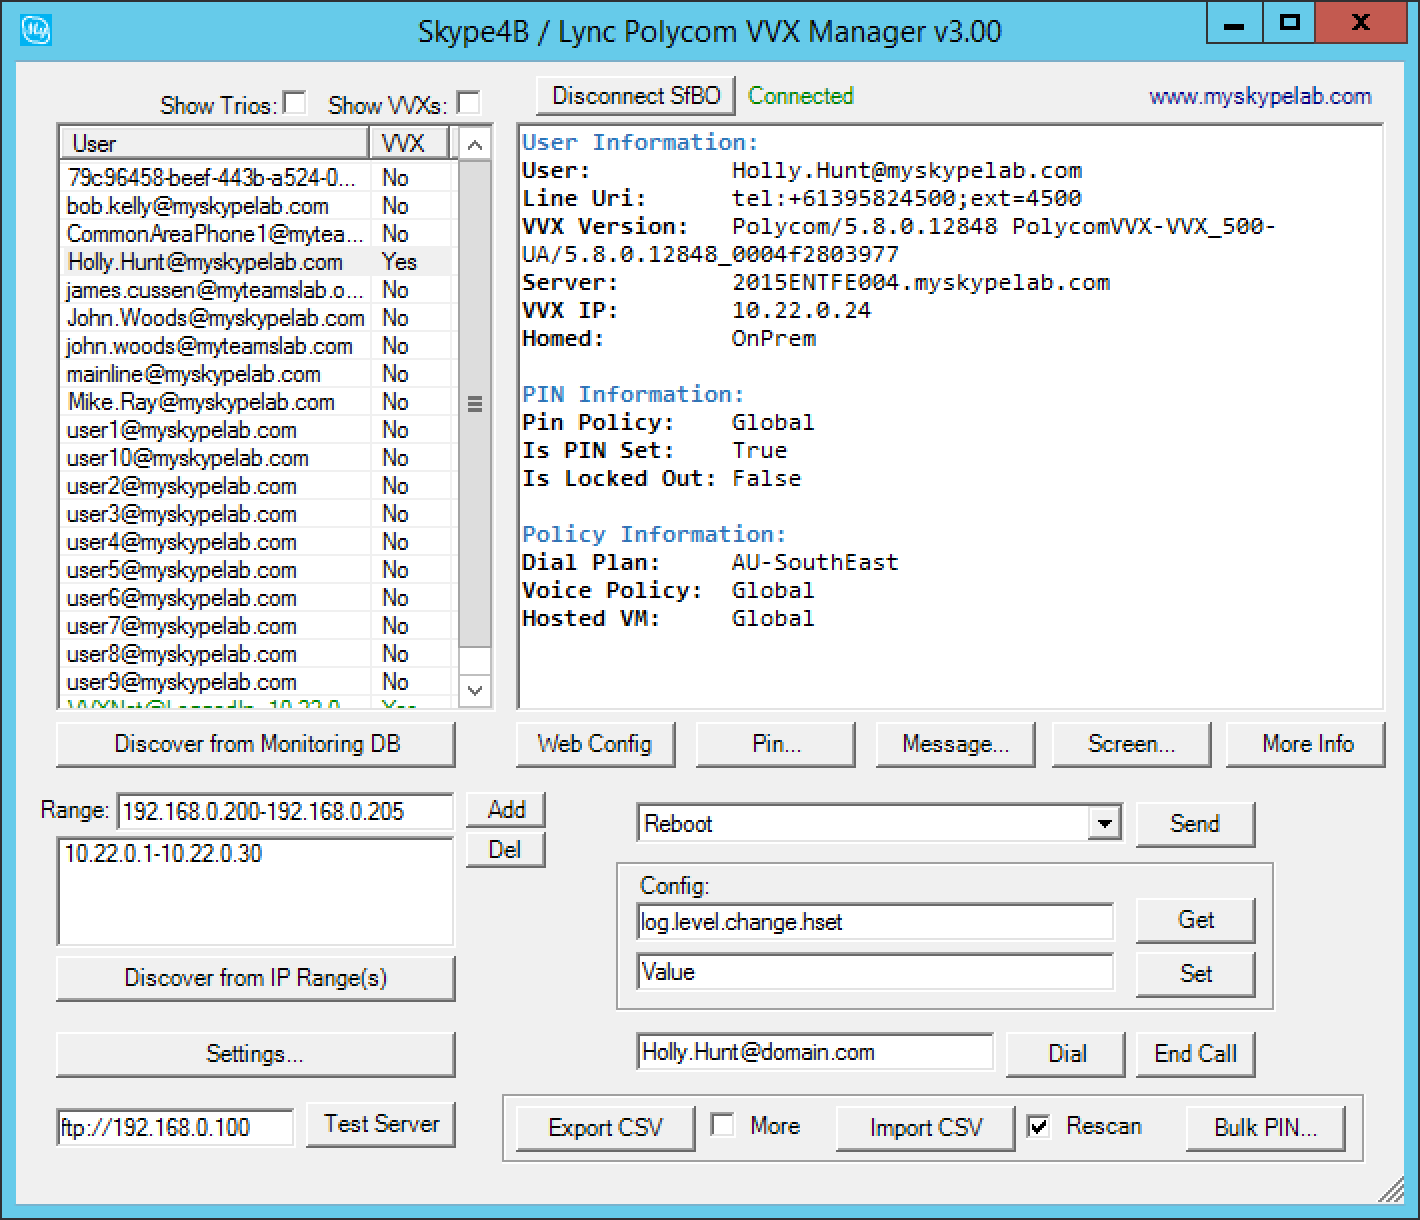 skype for business log file location filesystem mac